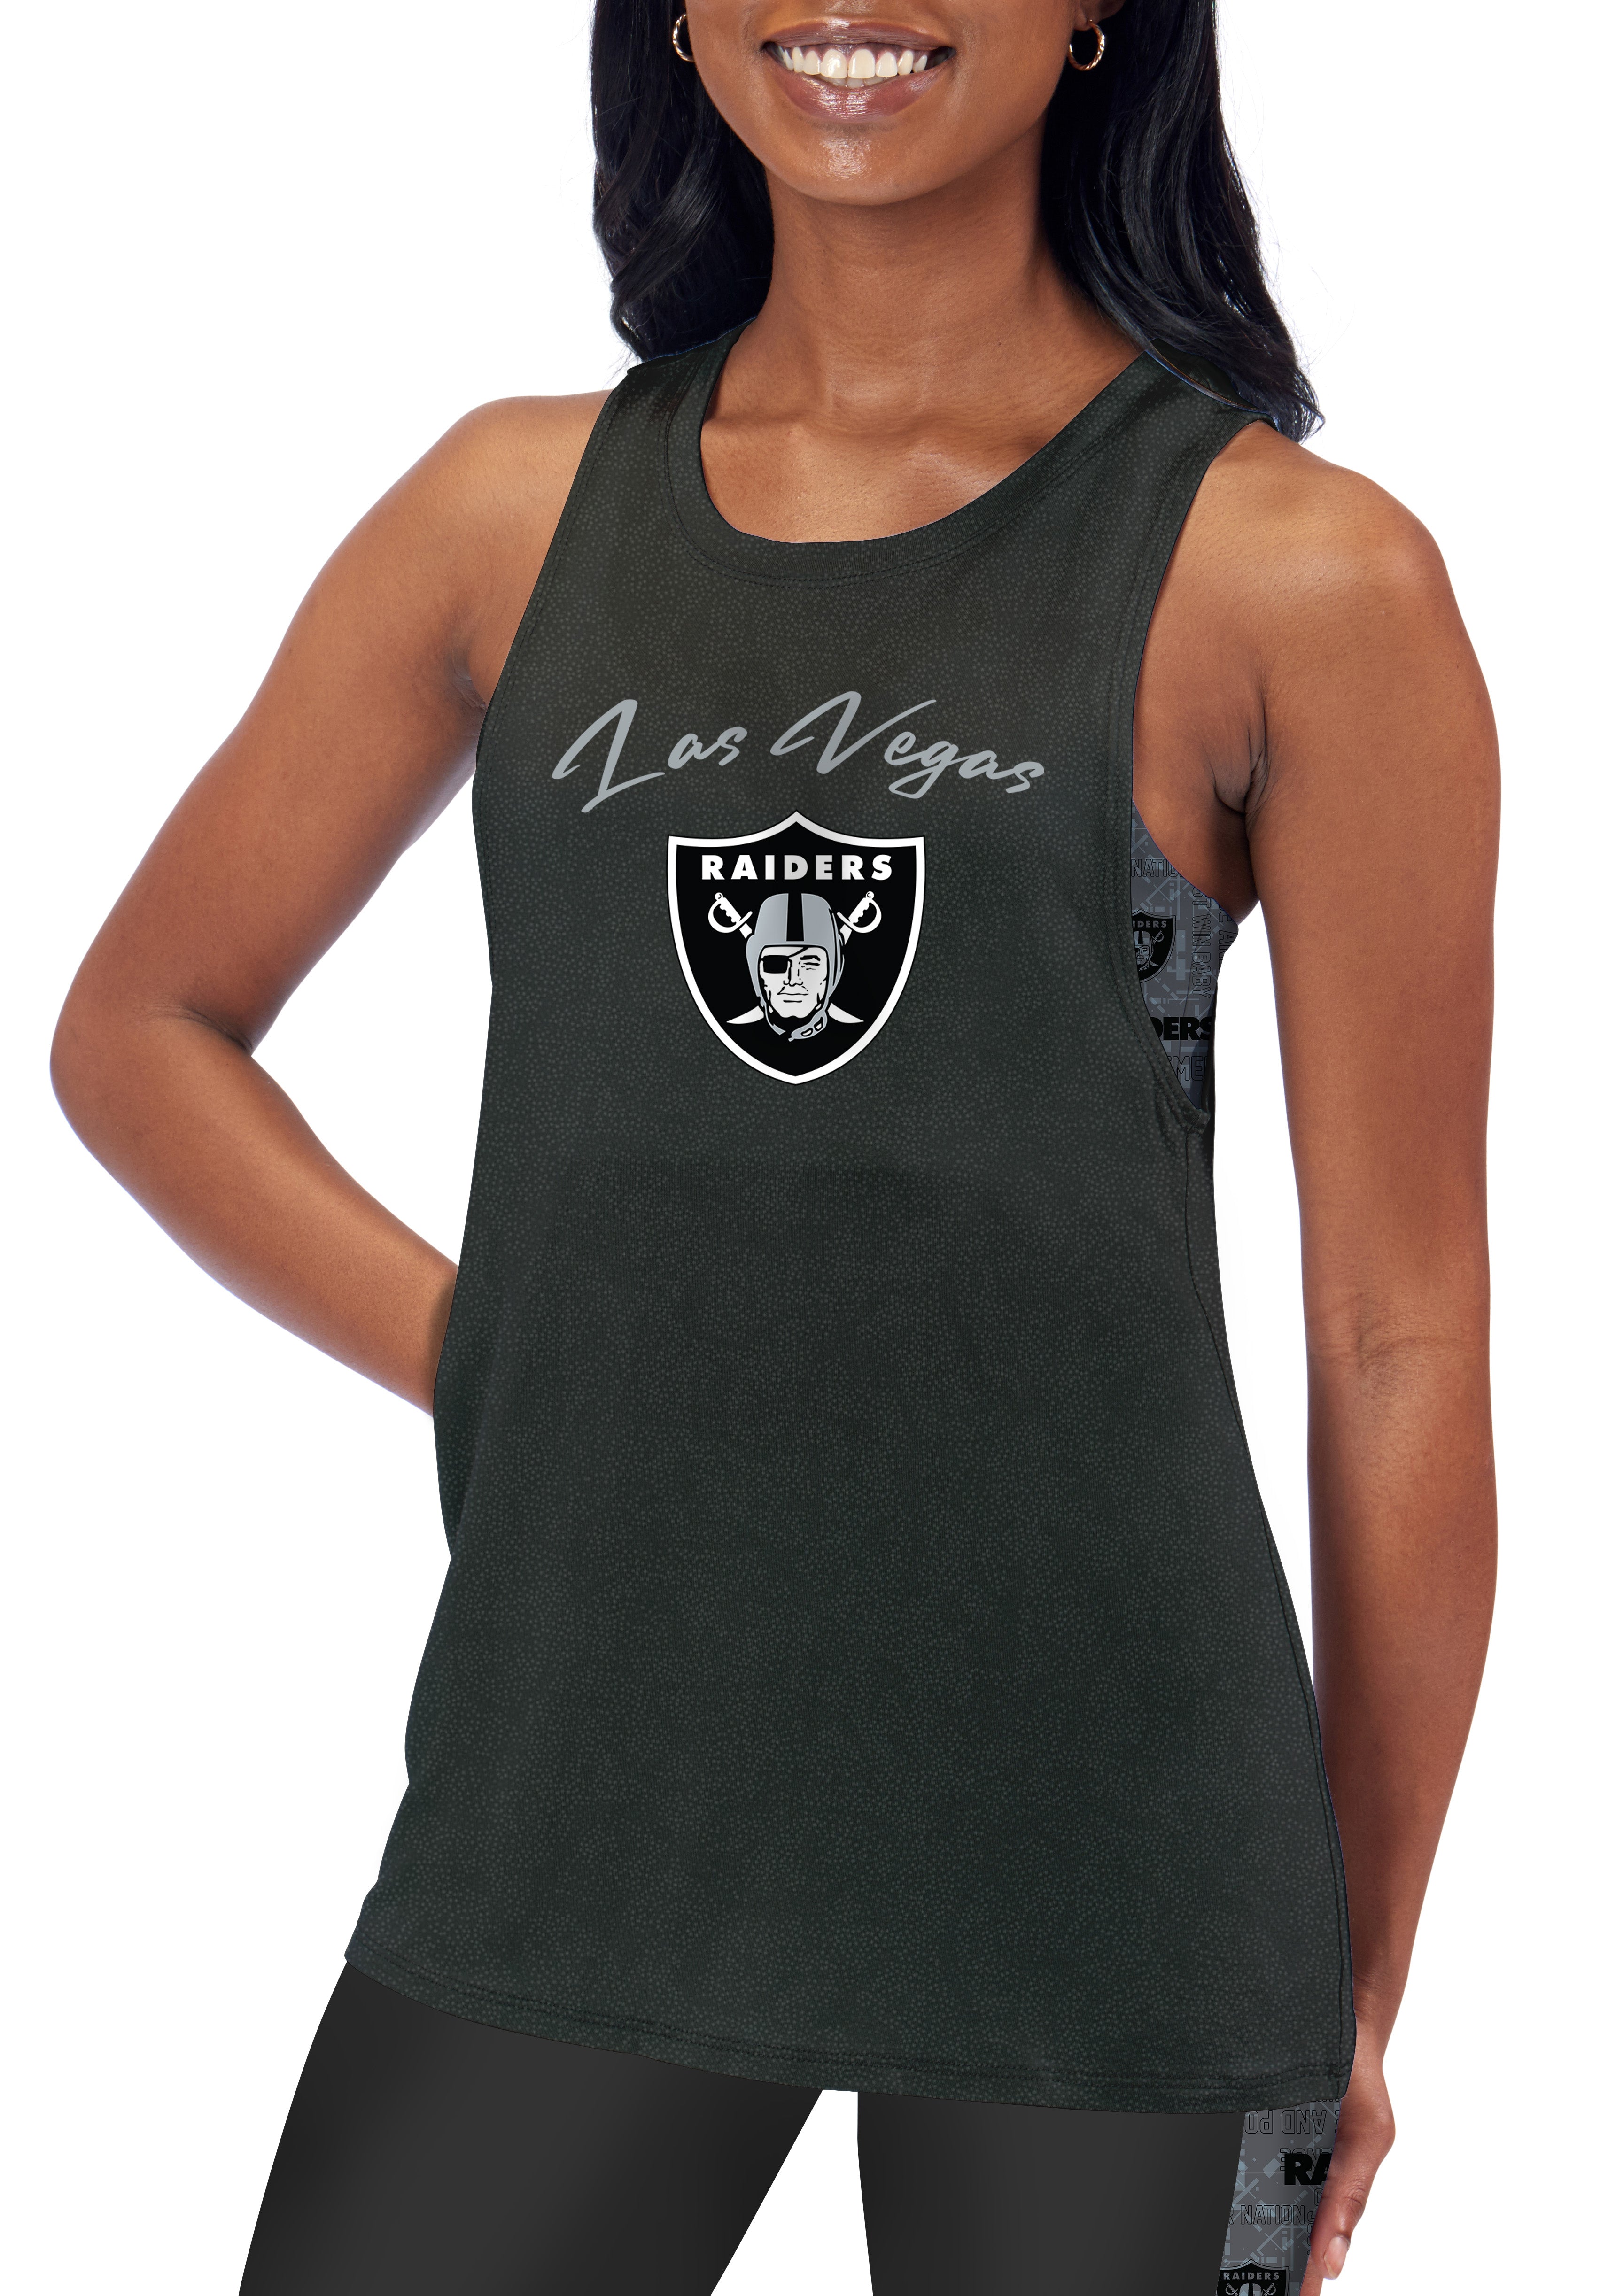 Las Vegas Raiders Women's NFL Team Apparel Plus Size Shirt 2X